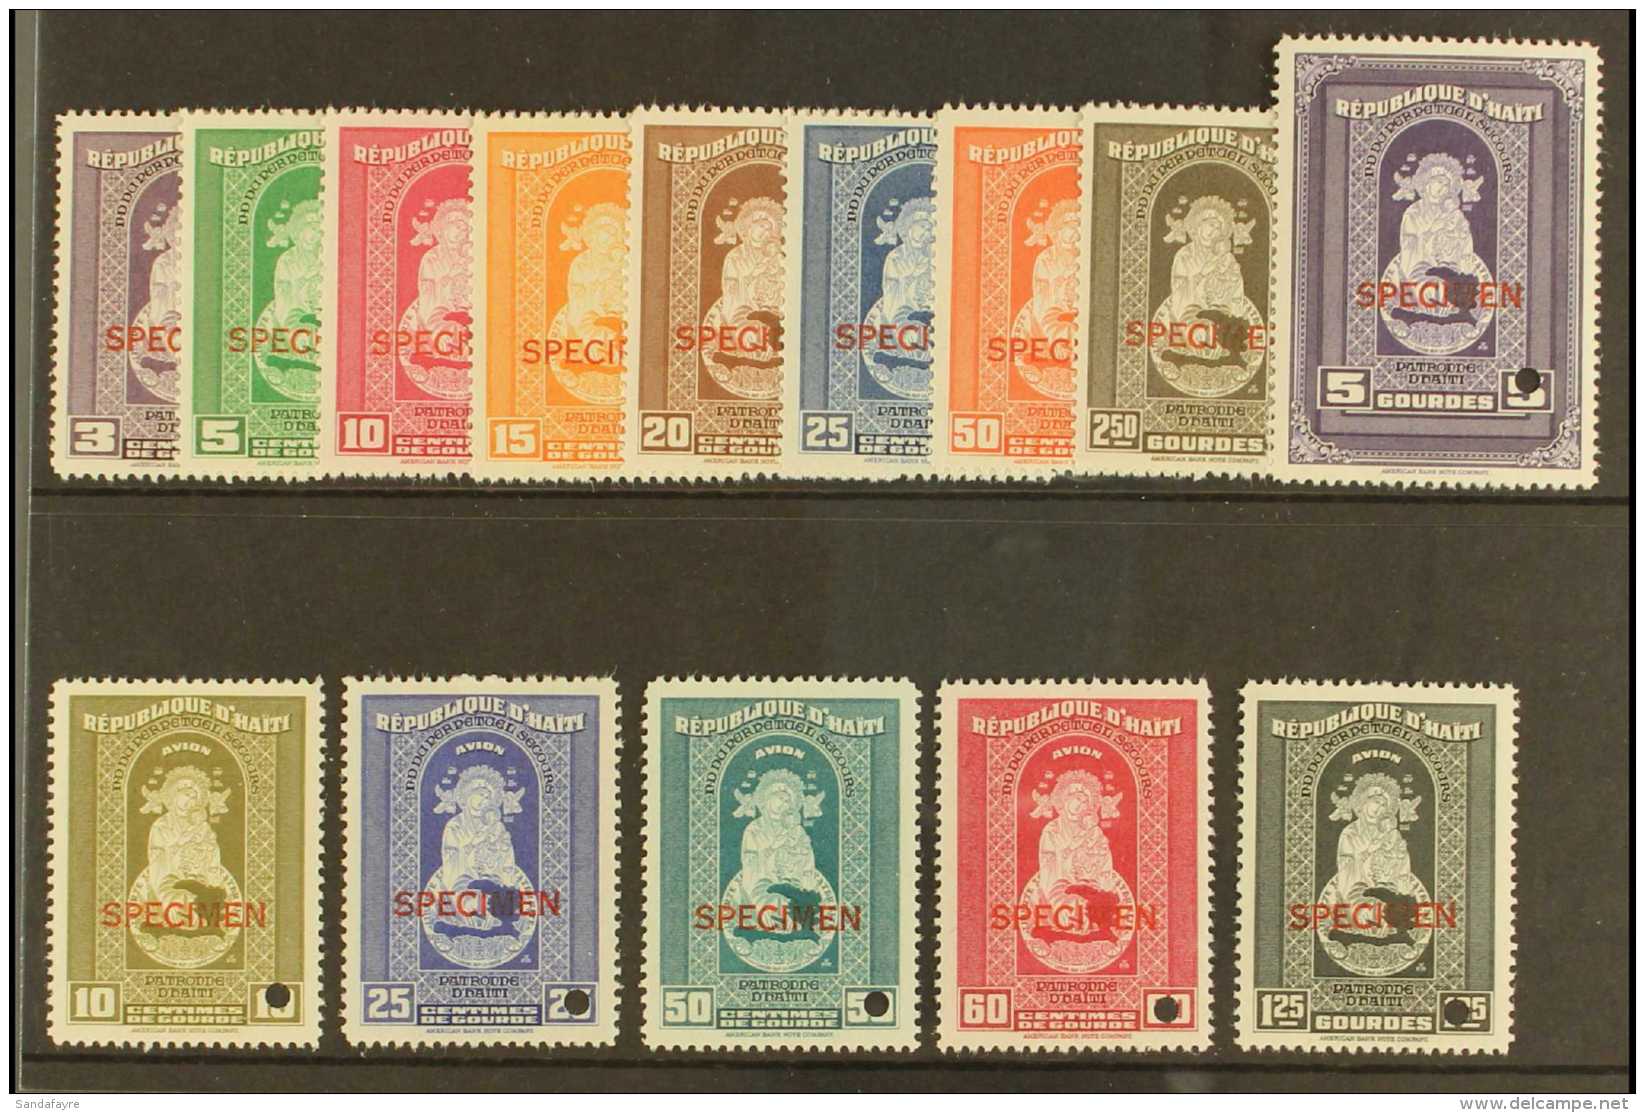 1942 Our Lady Complete Set With "SPECIMEN" Overprints (SG 343/56, Scott 340/48 &amp; C14/18), Very Fine Never... - Haiti